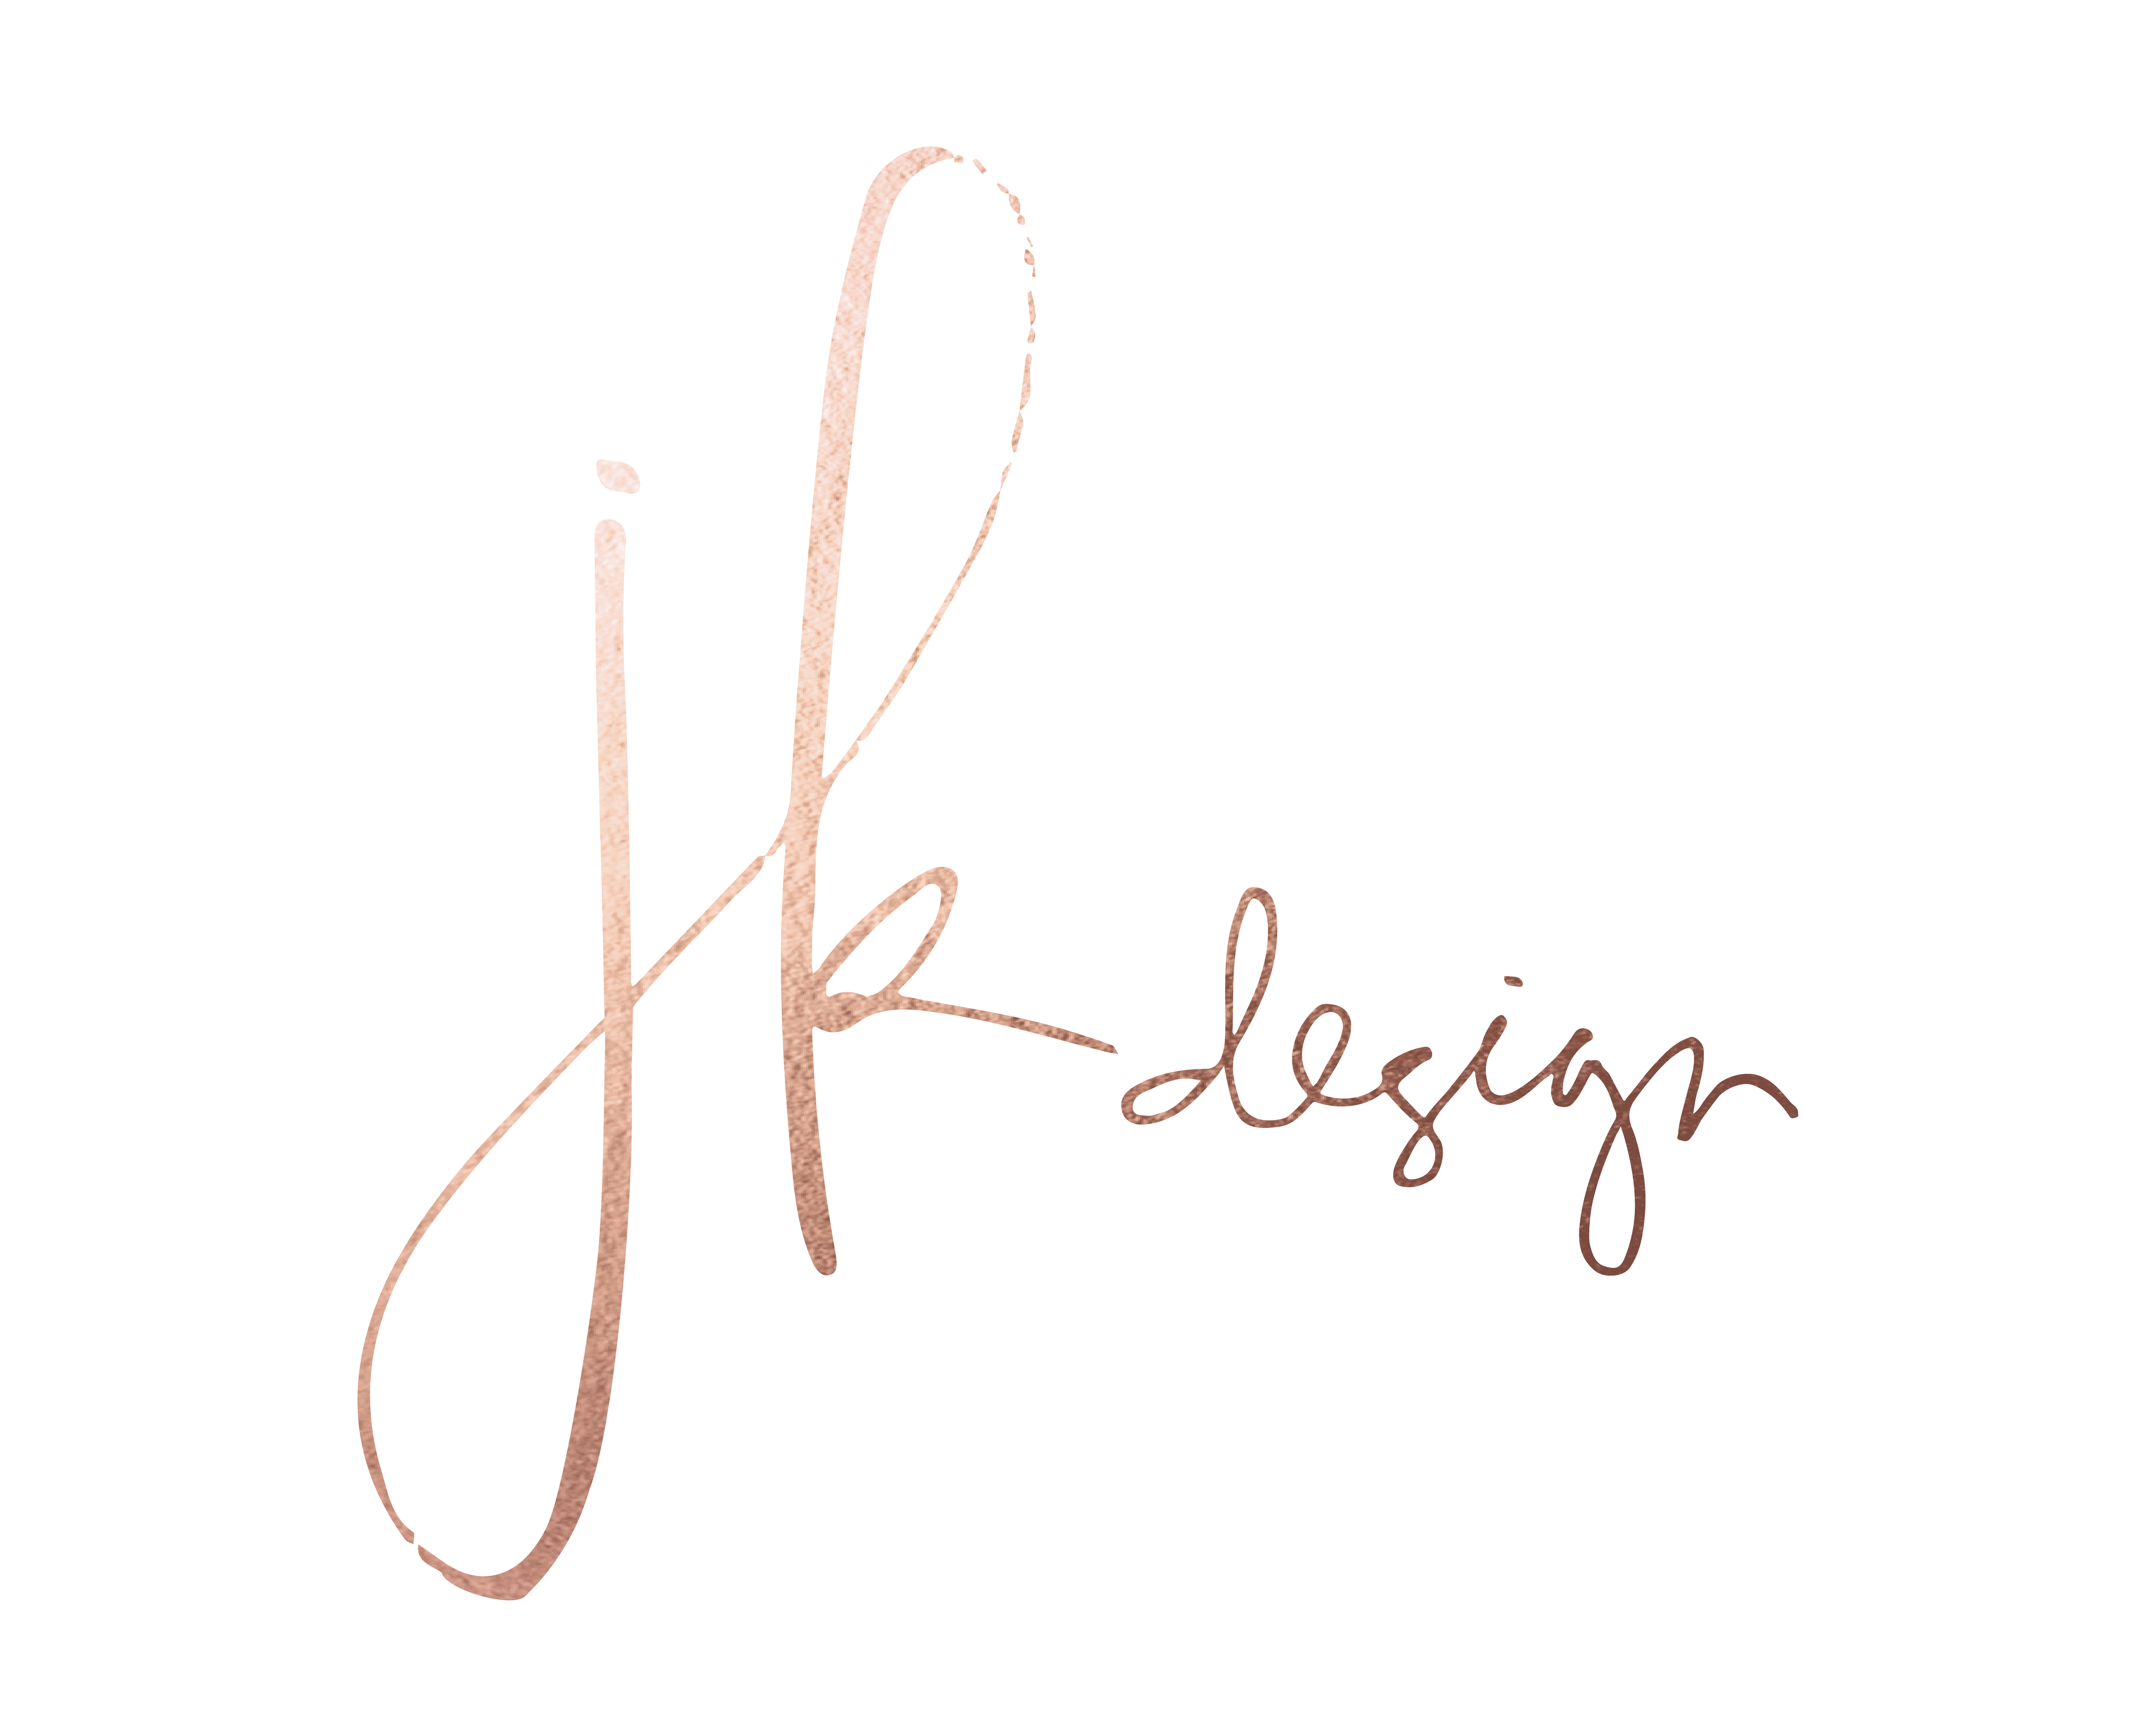 Jk Design Invitations Paper Goods The Knot